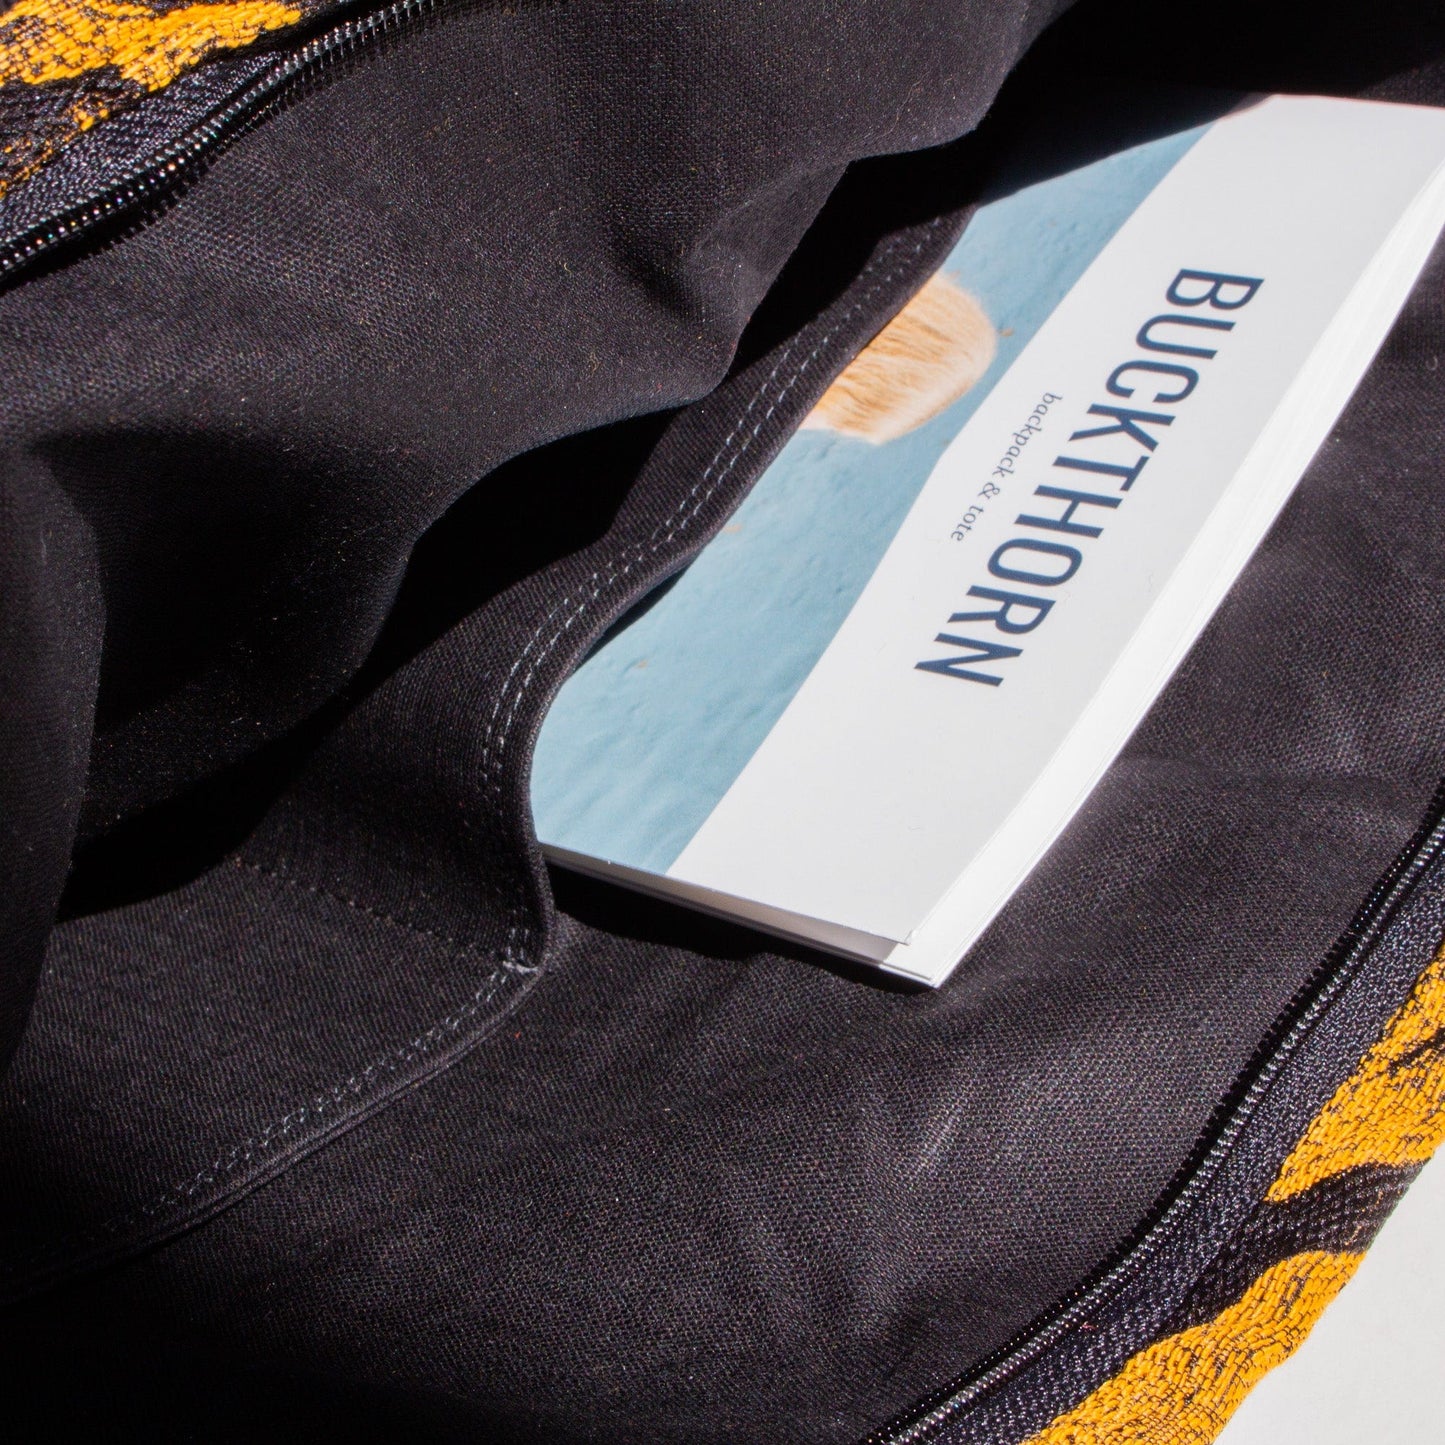 Materials Kit for Noodlehead Buckthorn Tiger Backpack